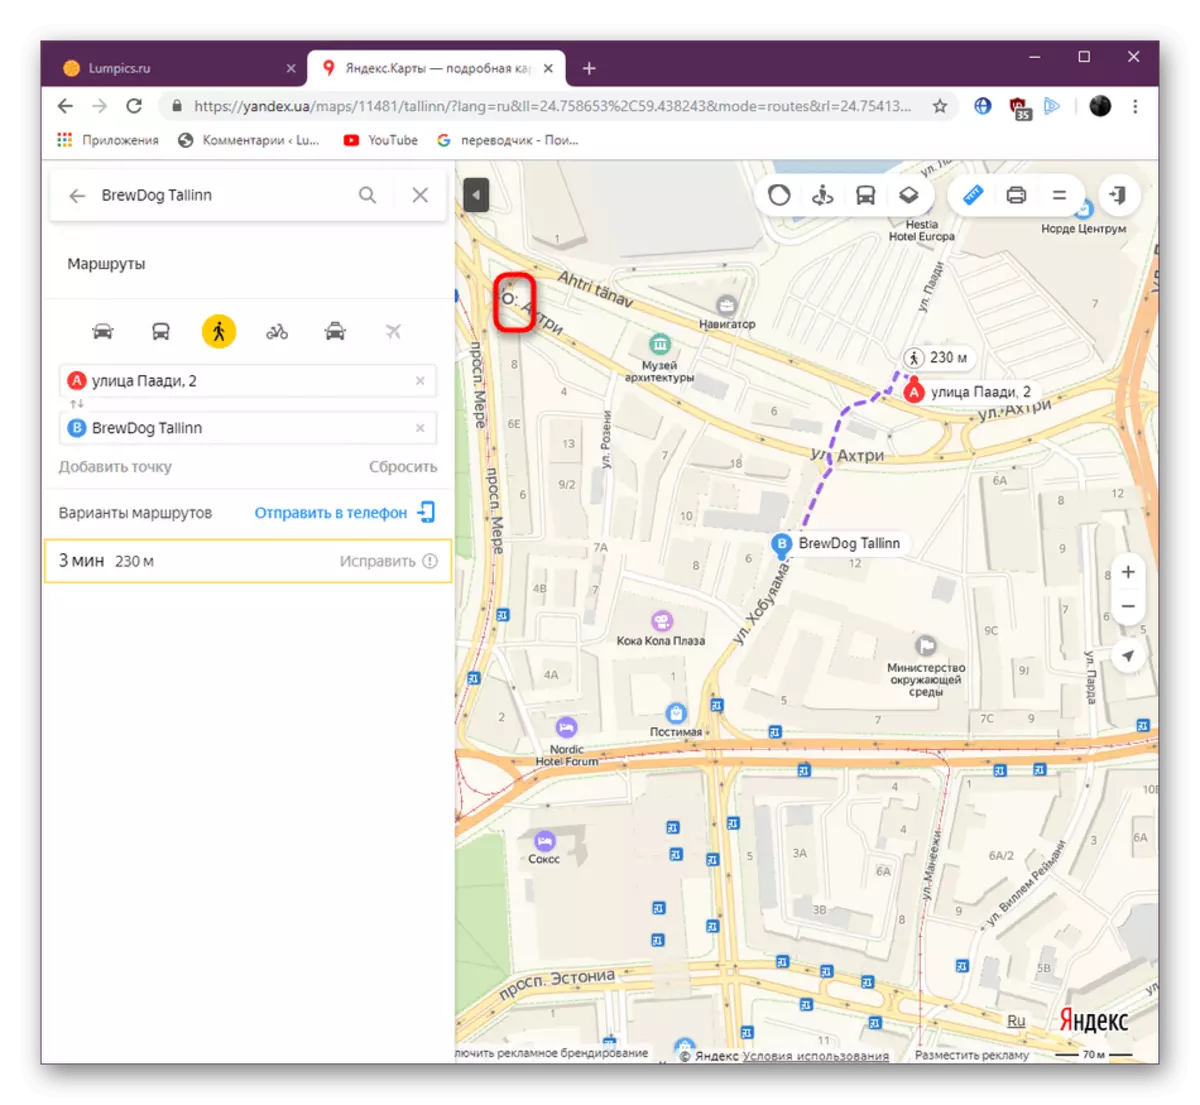 yandex.maps 웹 사이트의 도구 도구의 첫 번째 지점 설치